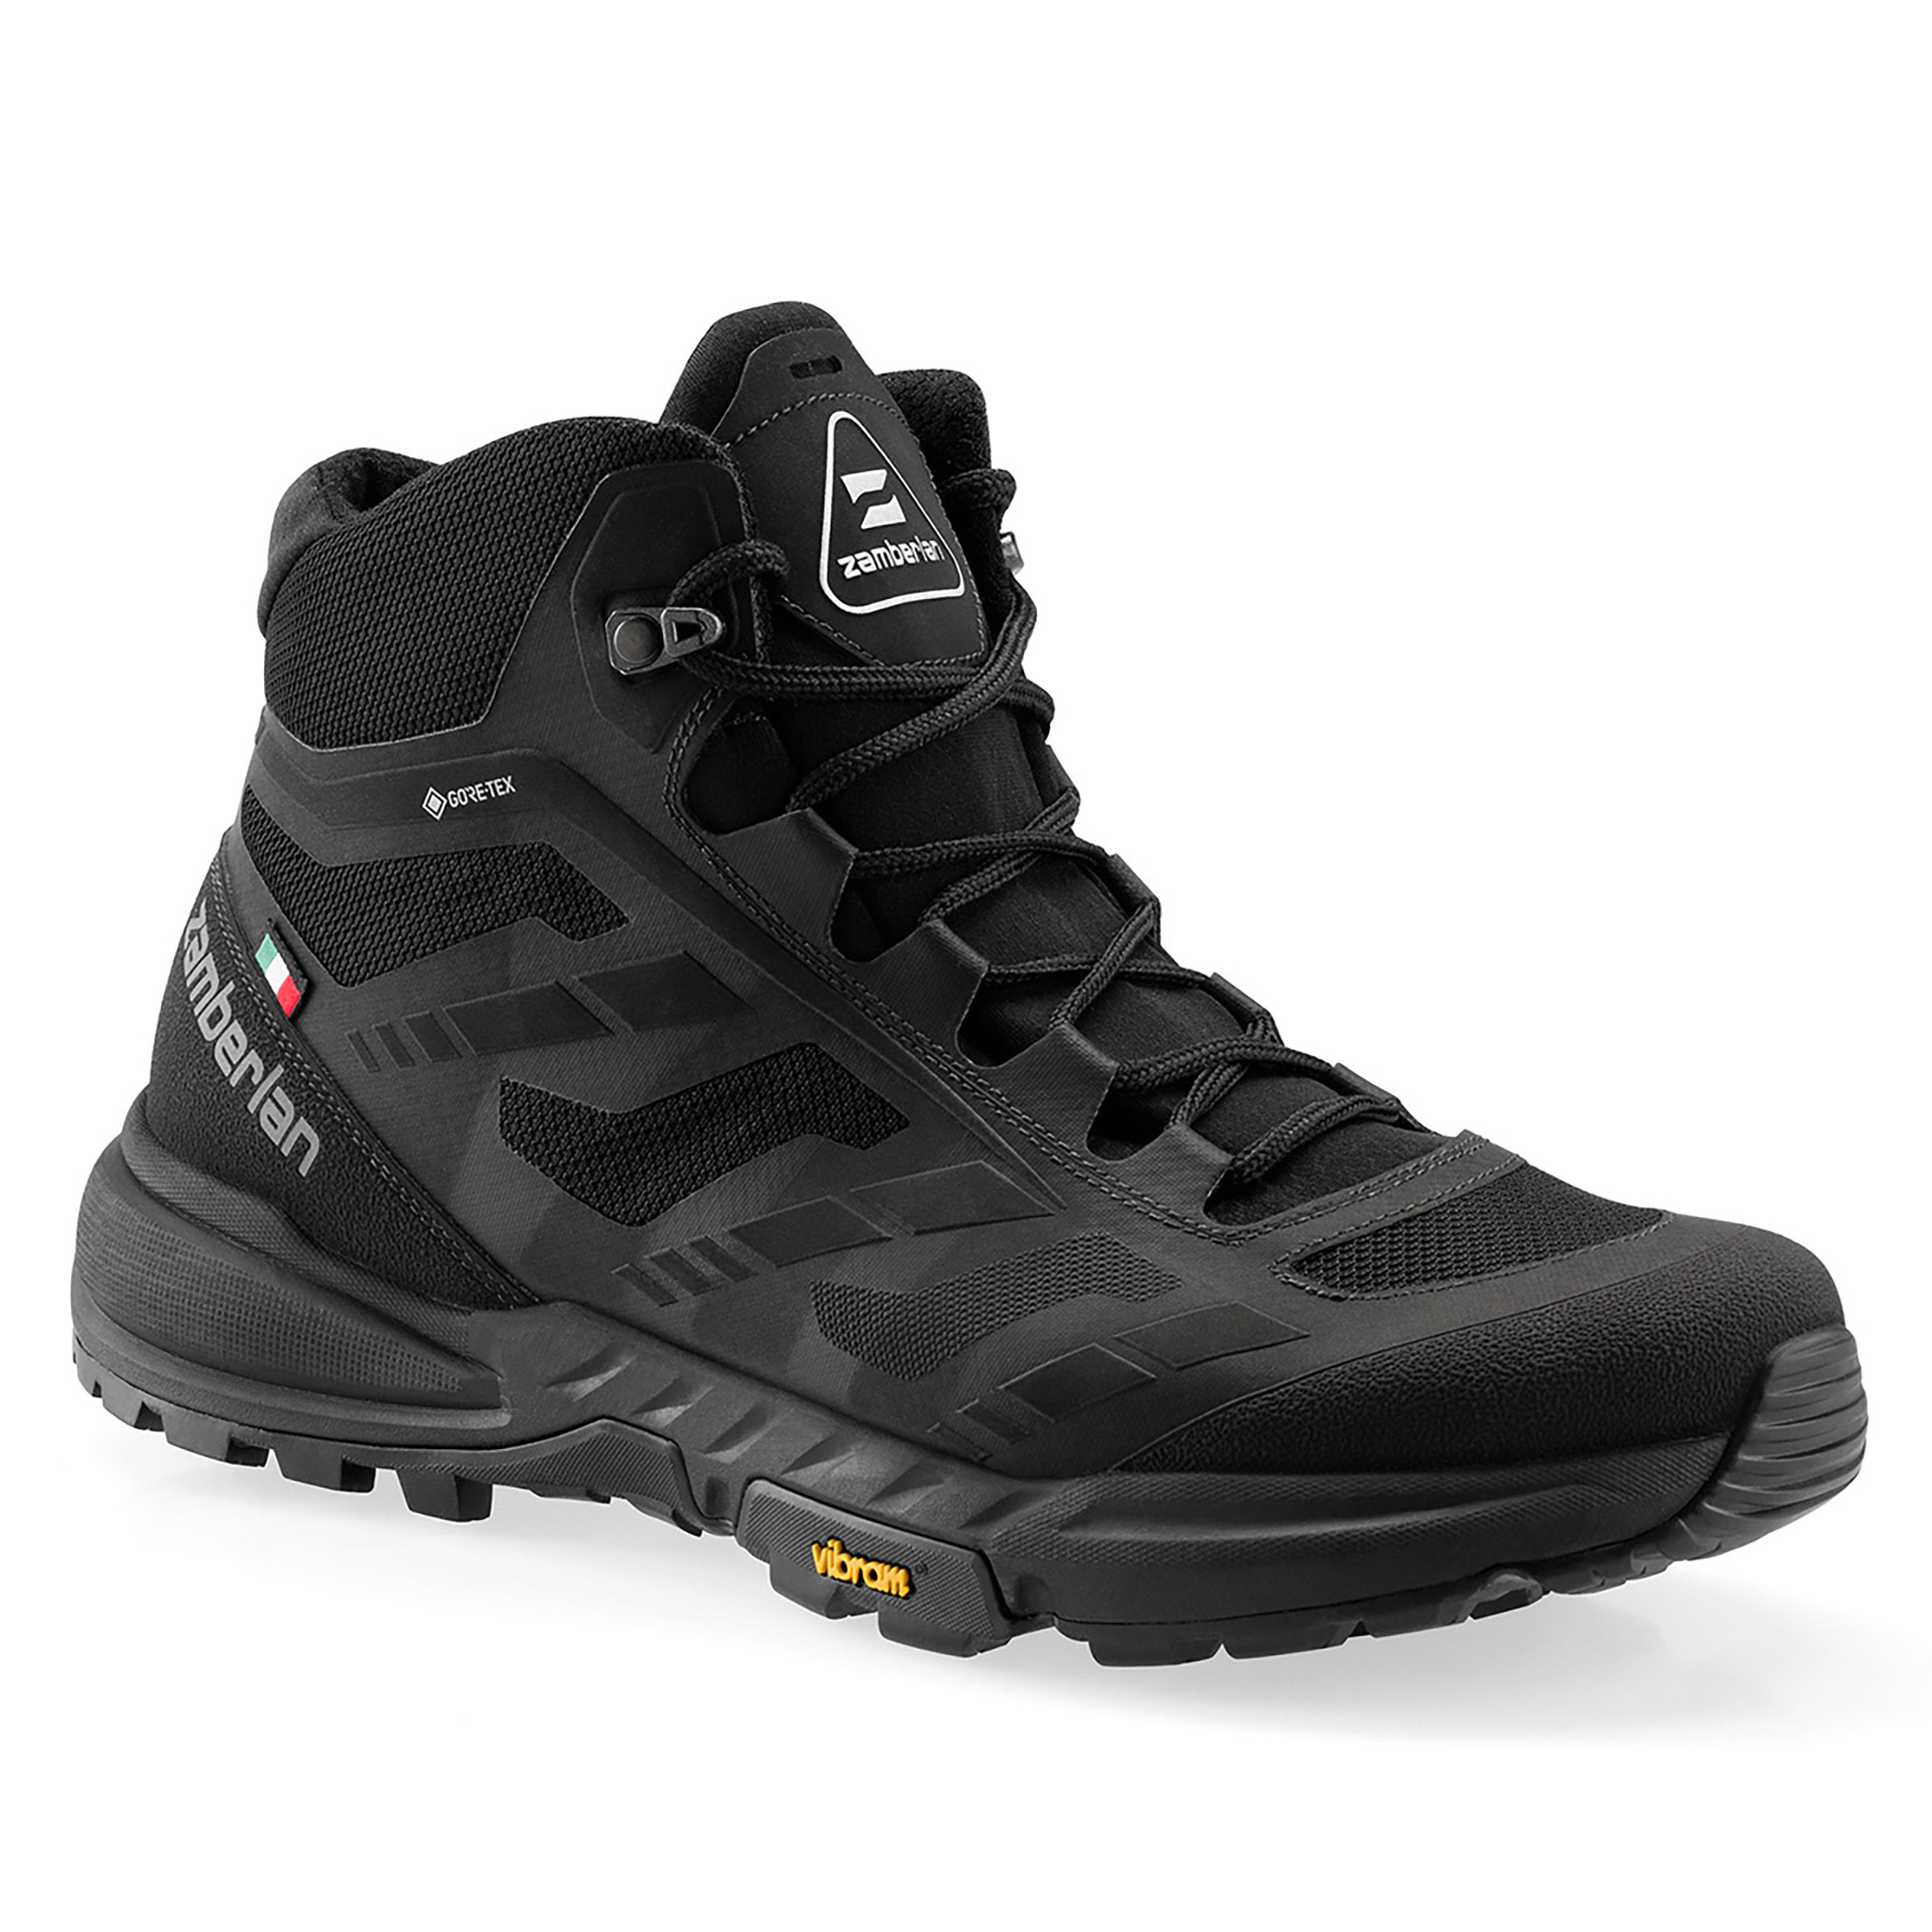 Zamberlan 219 Anabasis GTX Waterproof Mid Hiking Boots for Men - Black - 8M